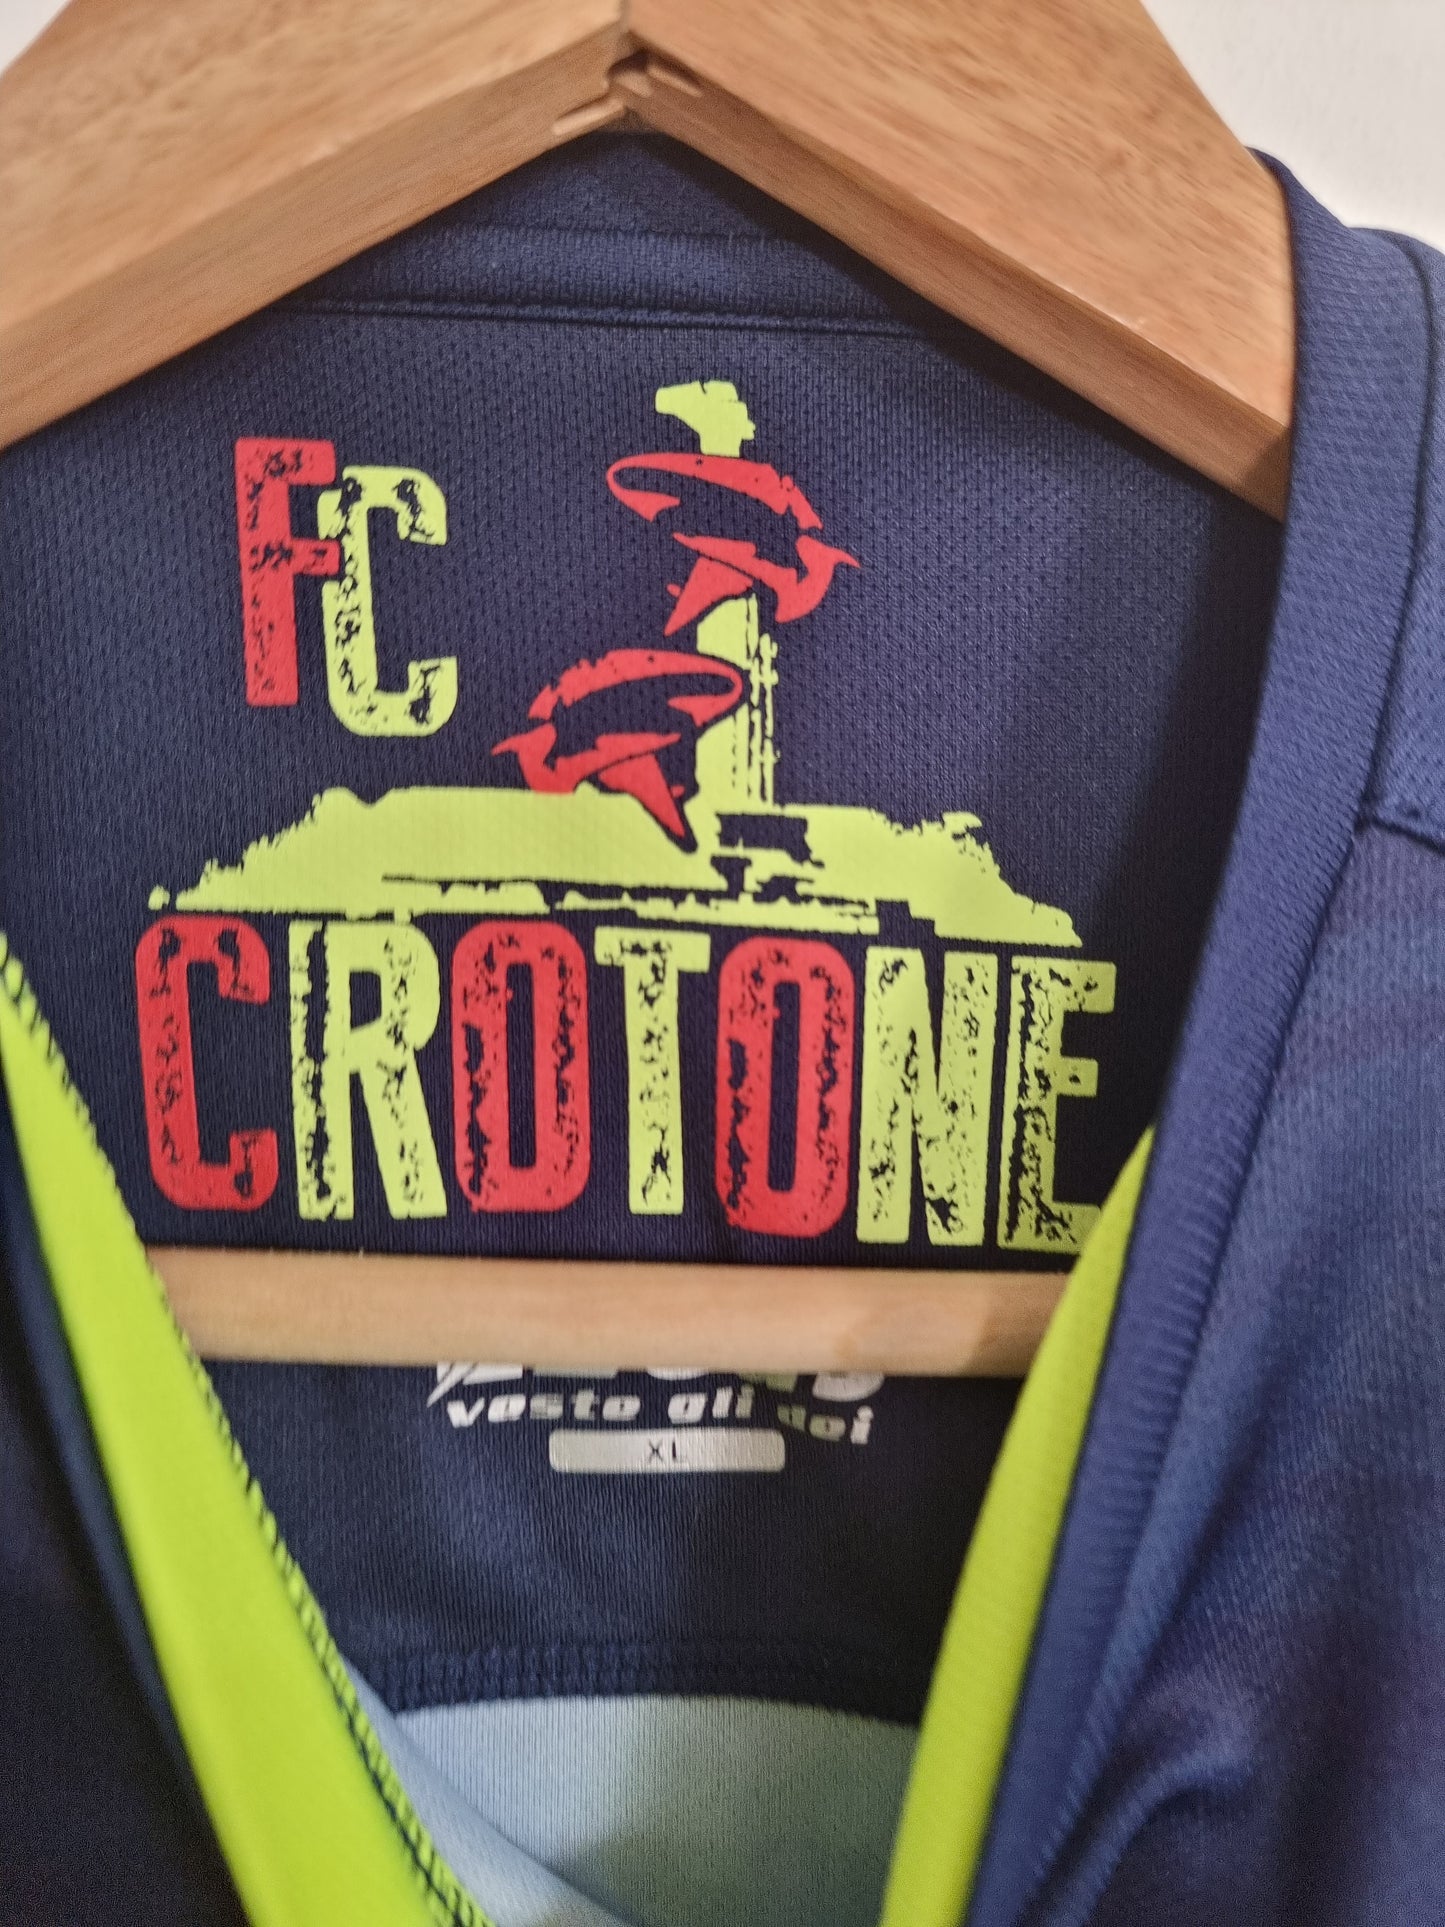 Zeus FC Crotone Training Shirt XL